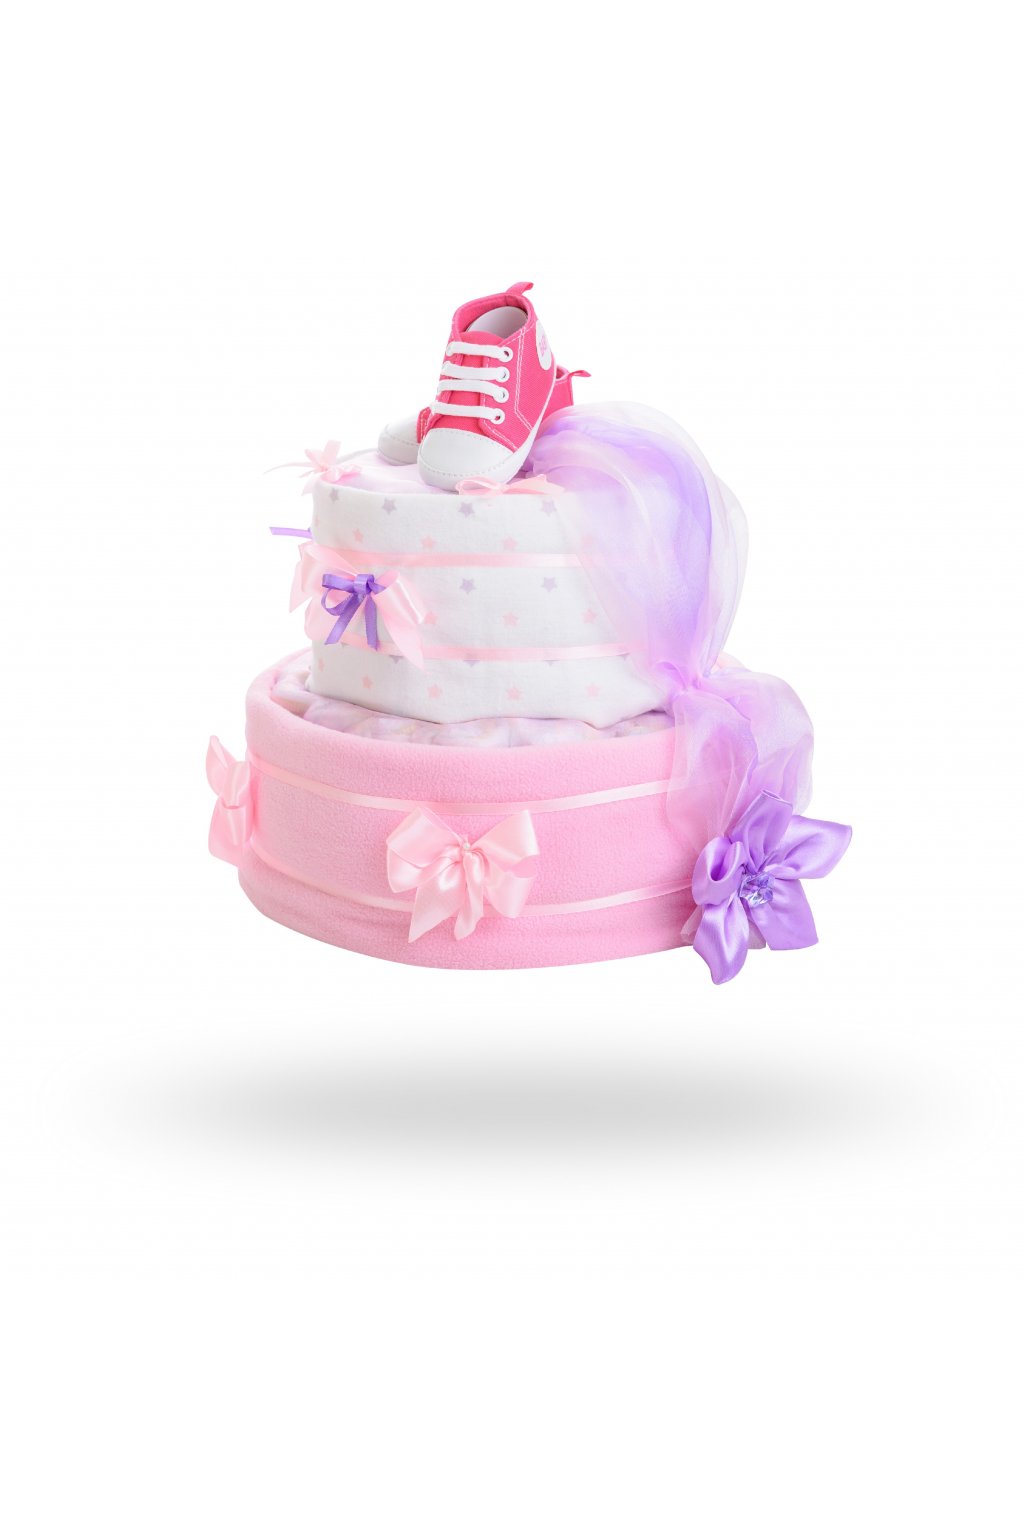 Dvoupatrový plenkový dort pro dívky – bílo růžový1